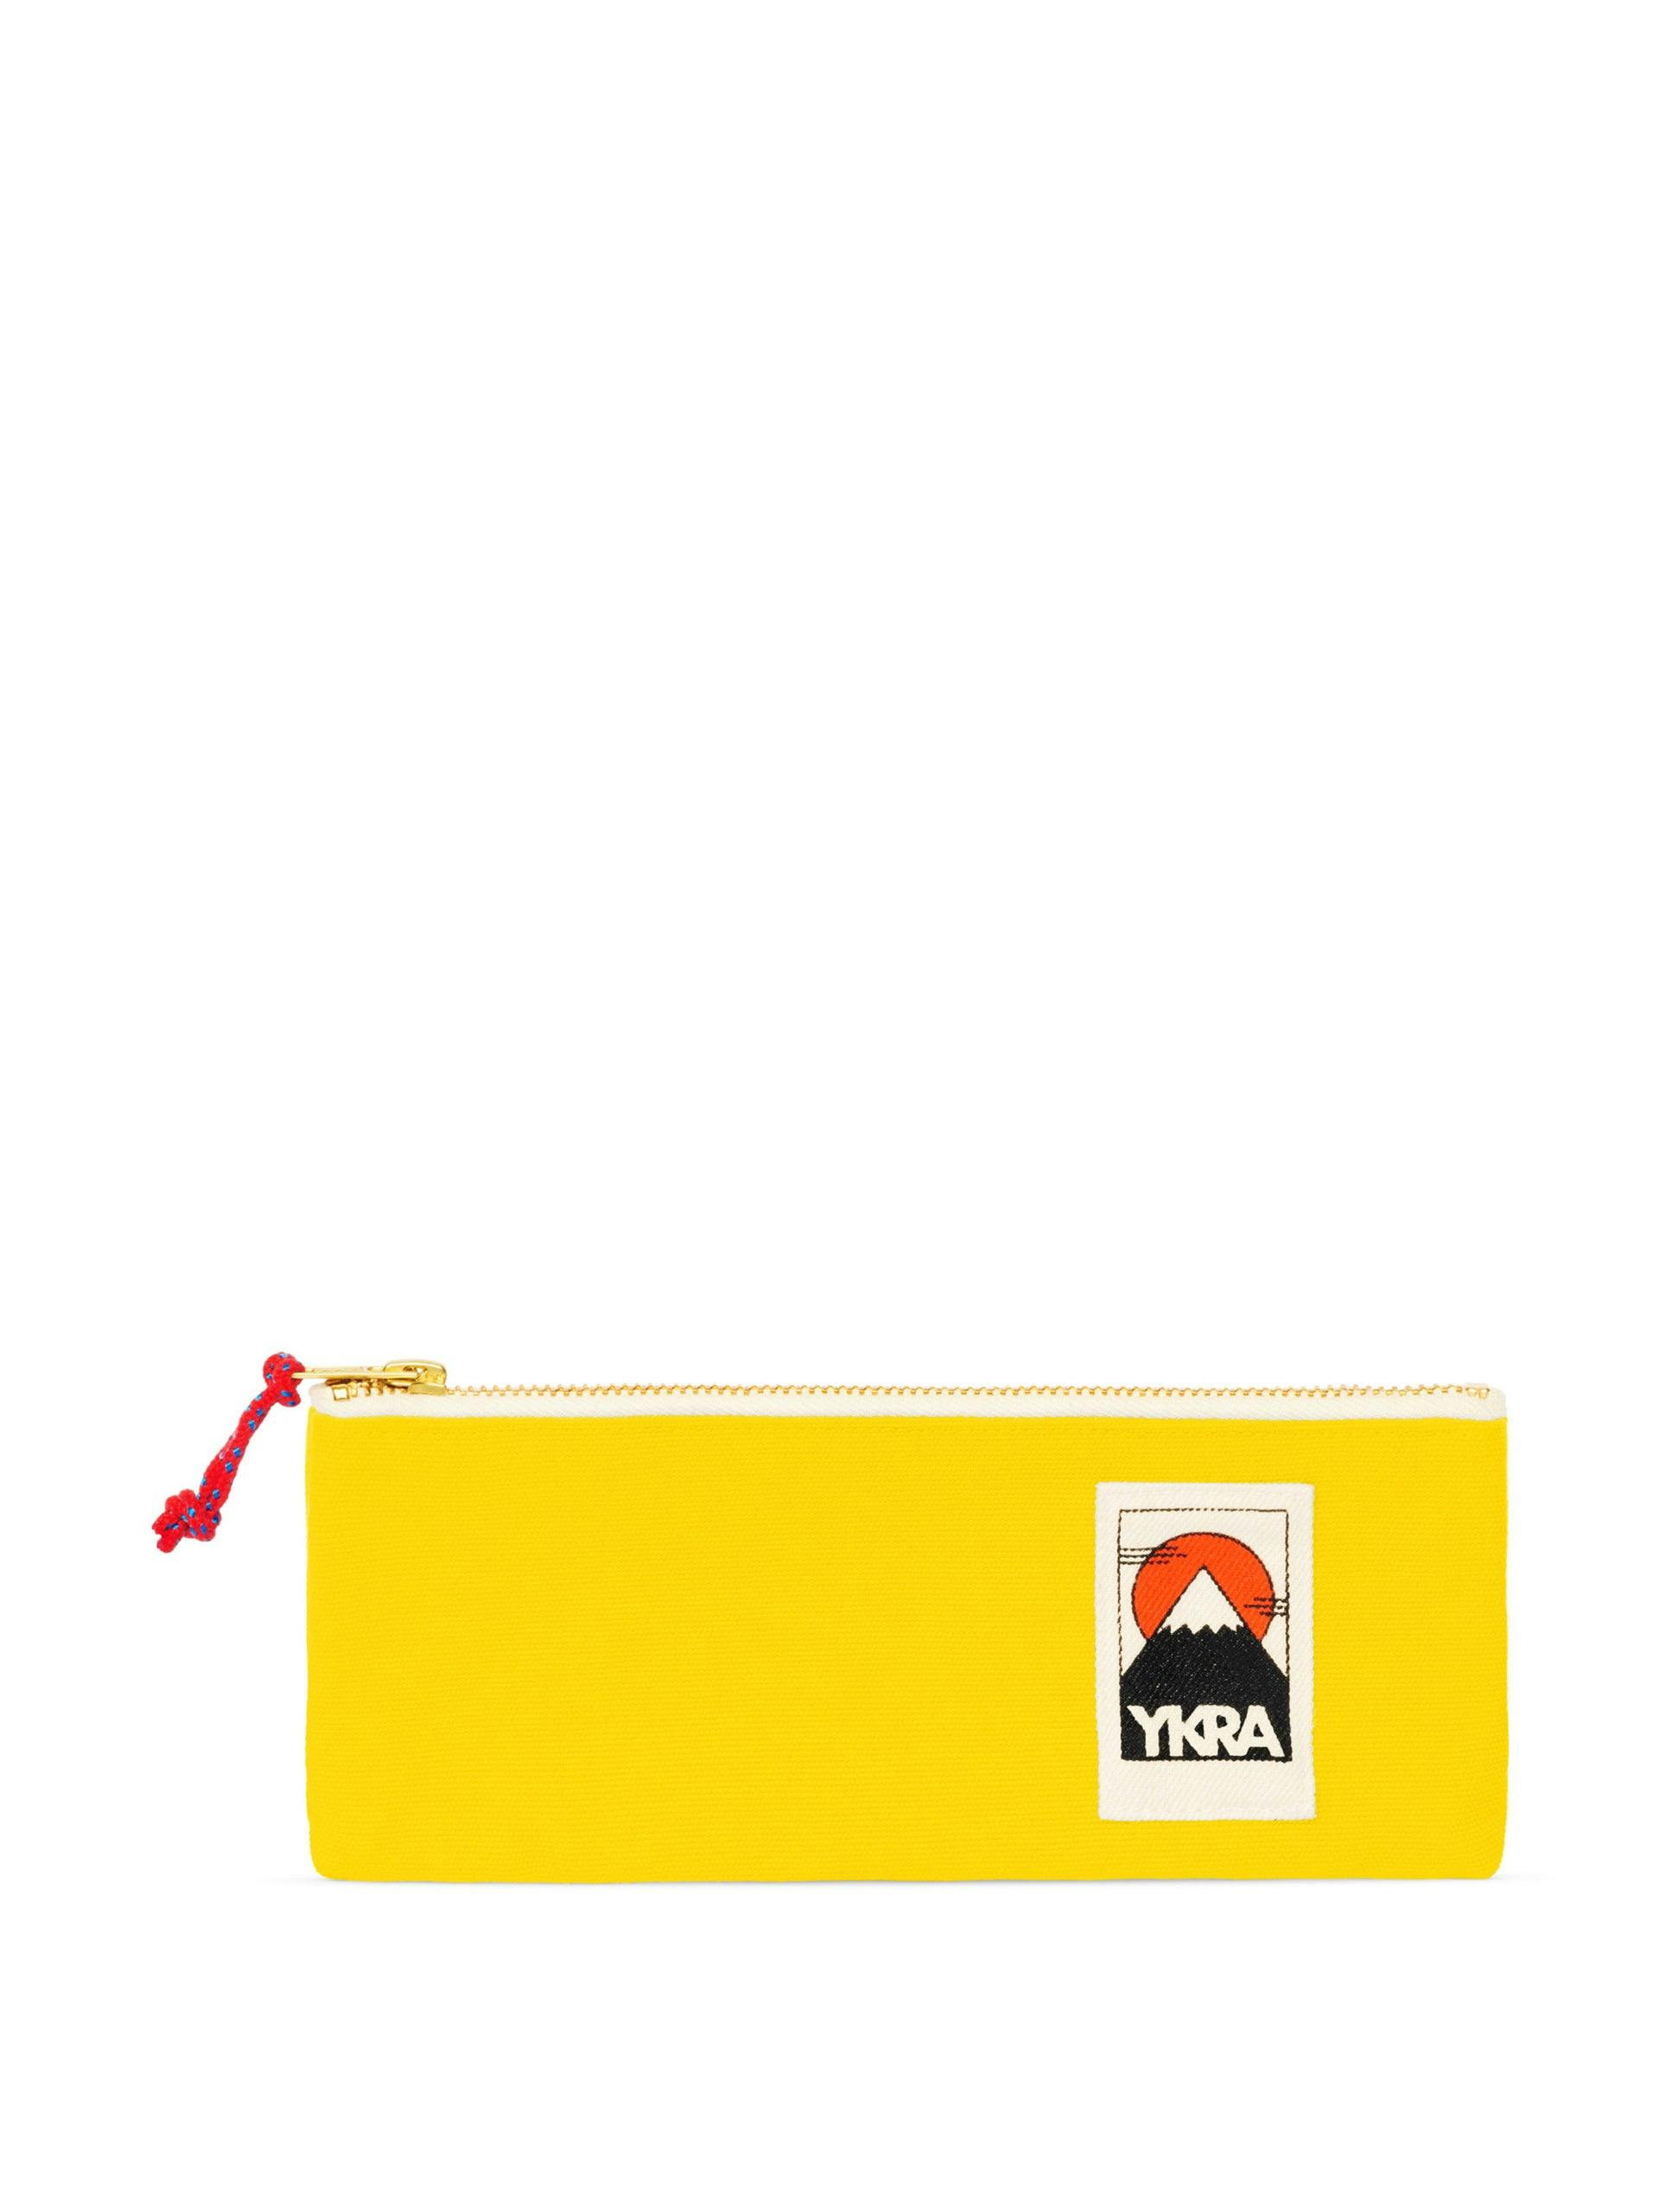 Yellow pencil case